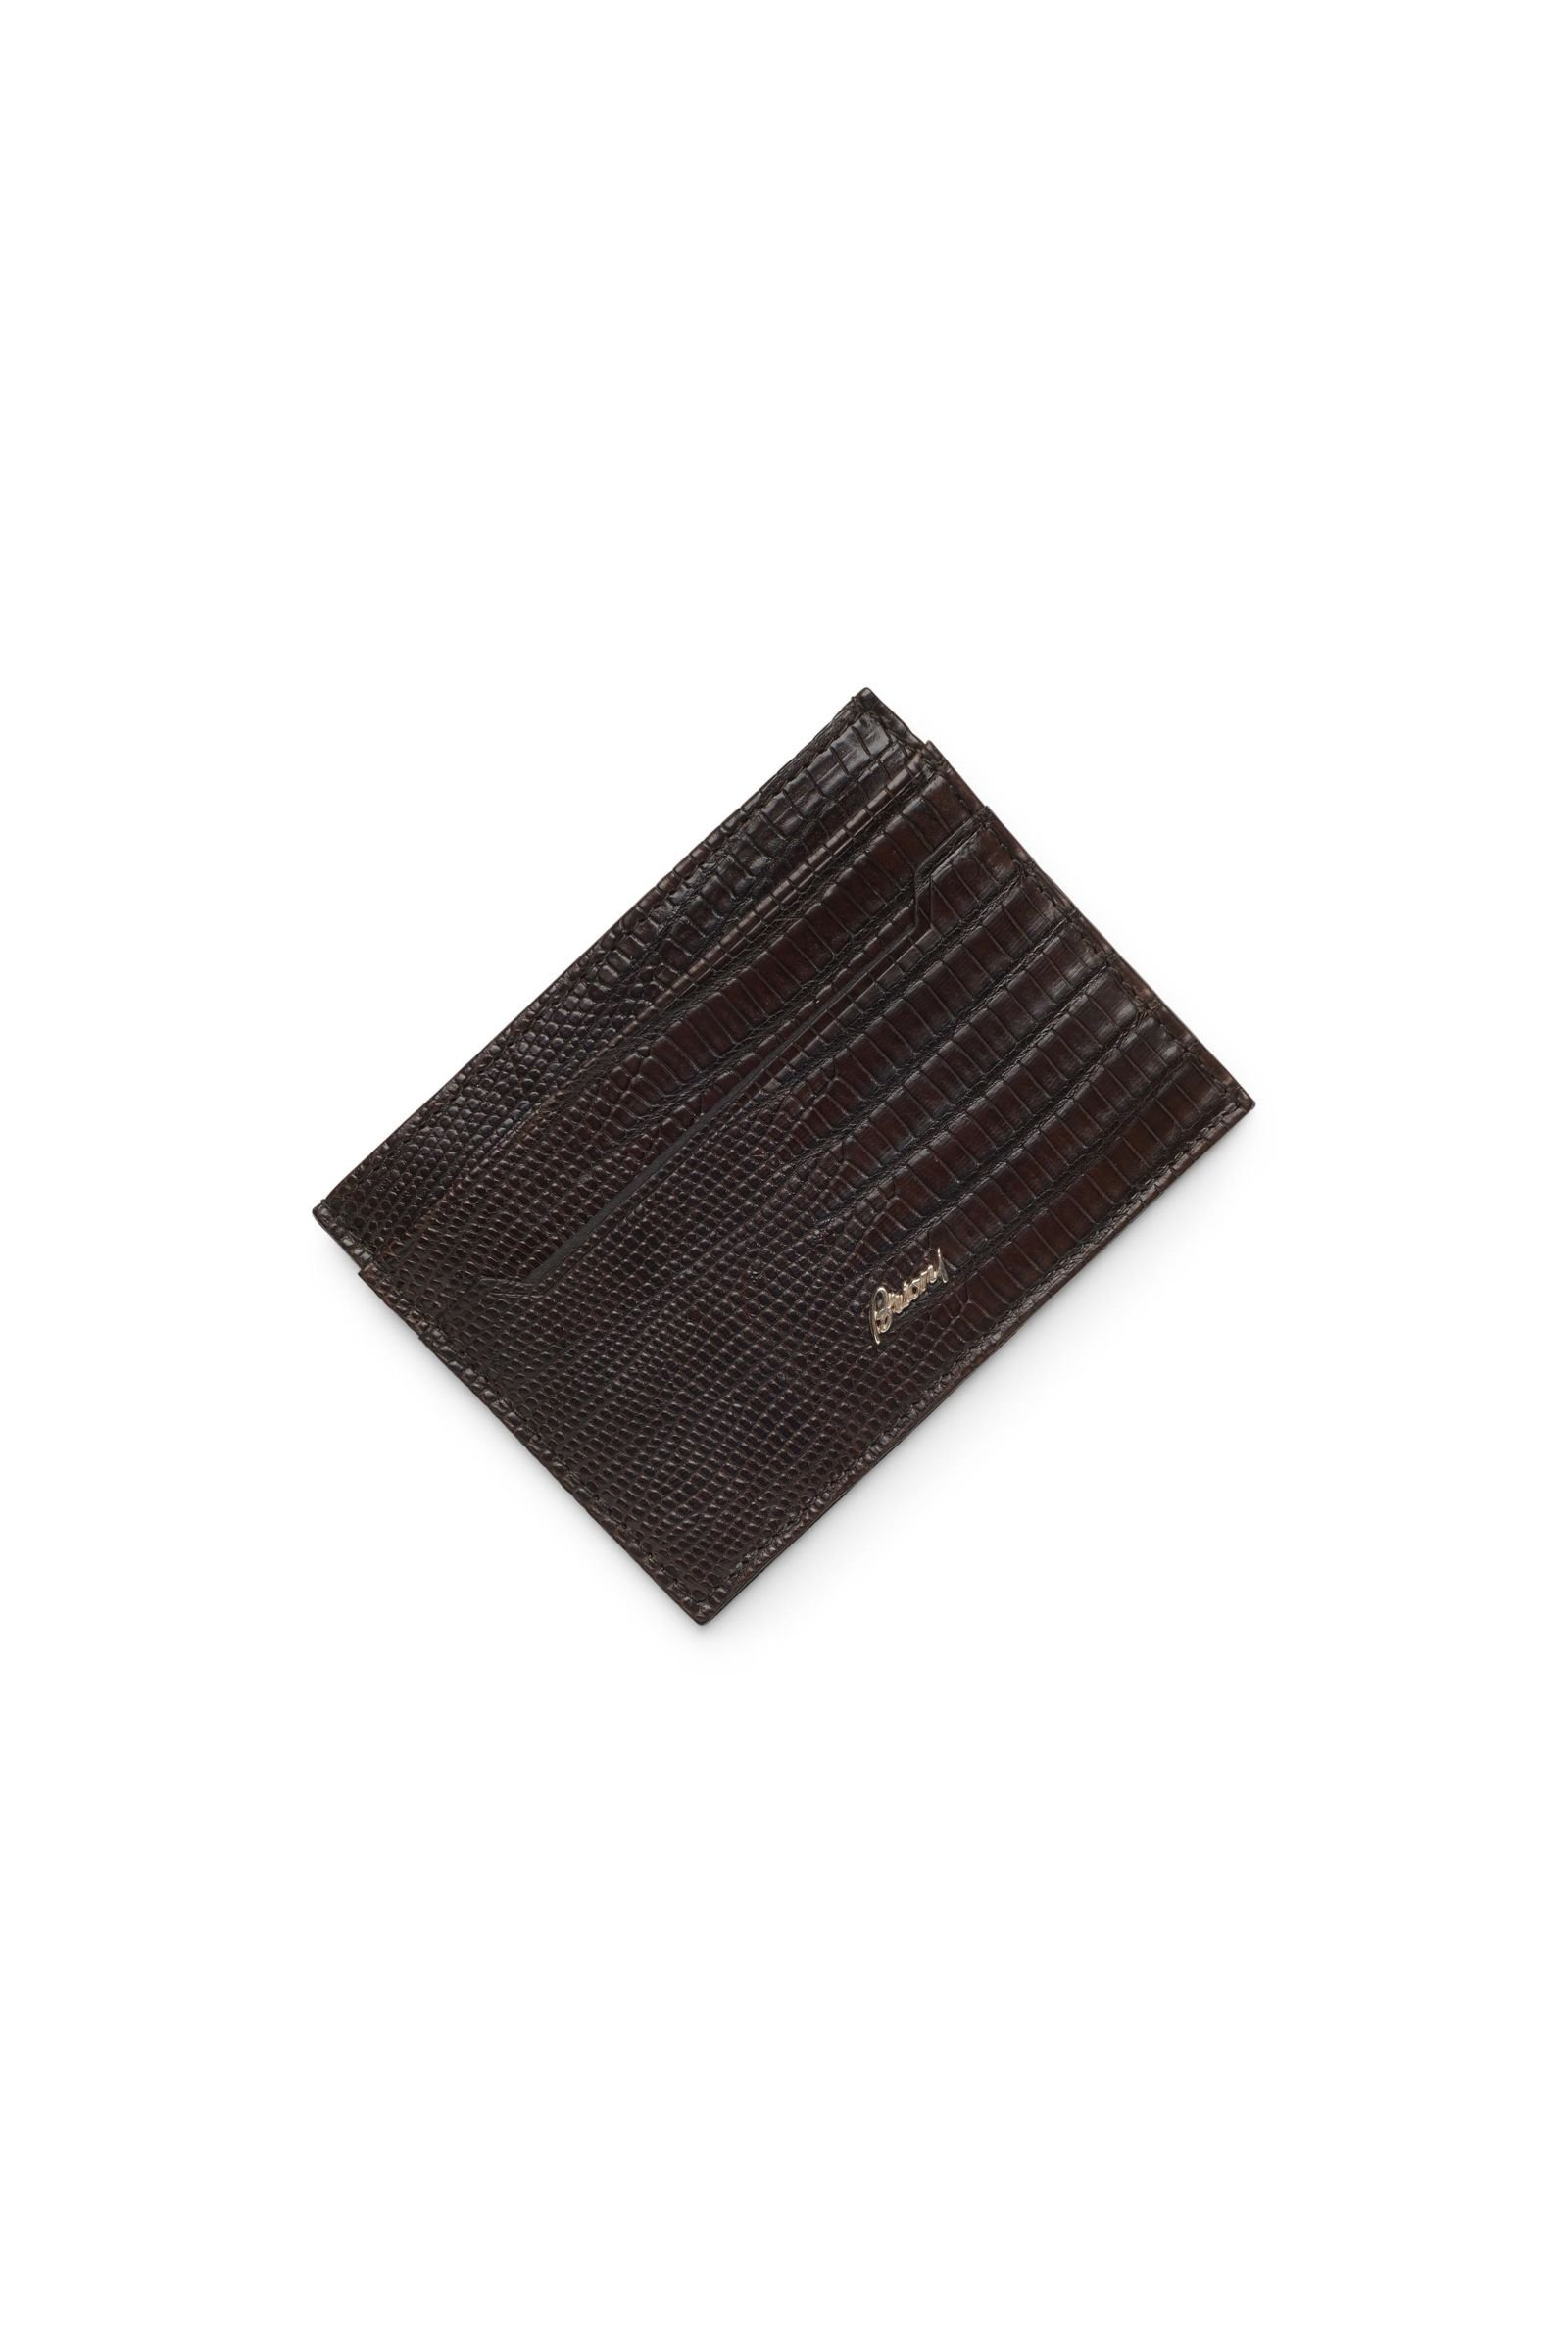 Snakeskin credit card holder dark brown